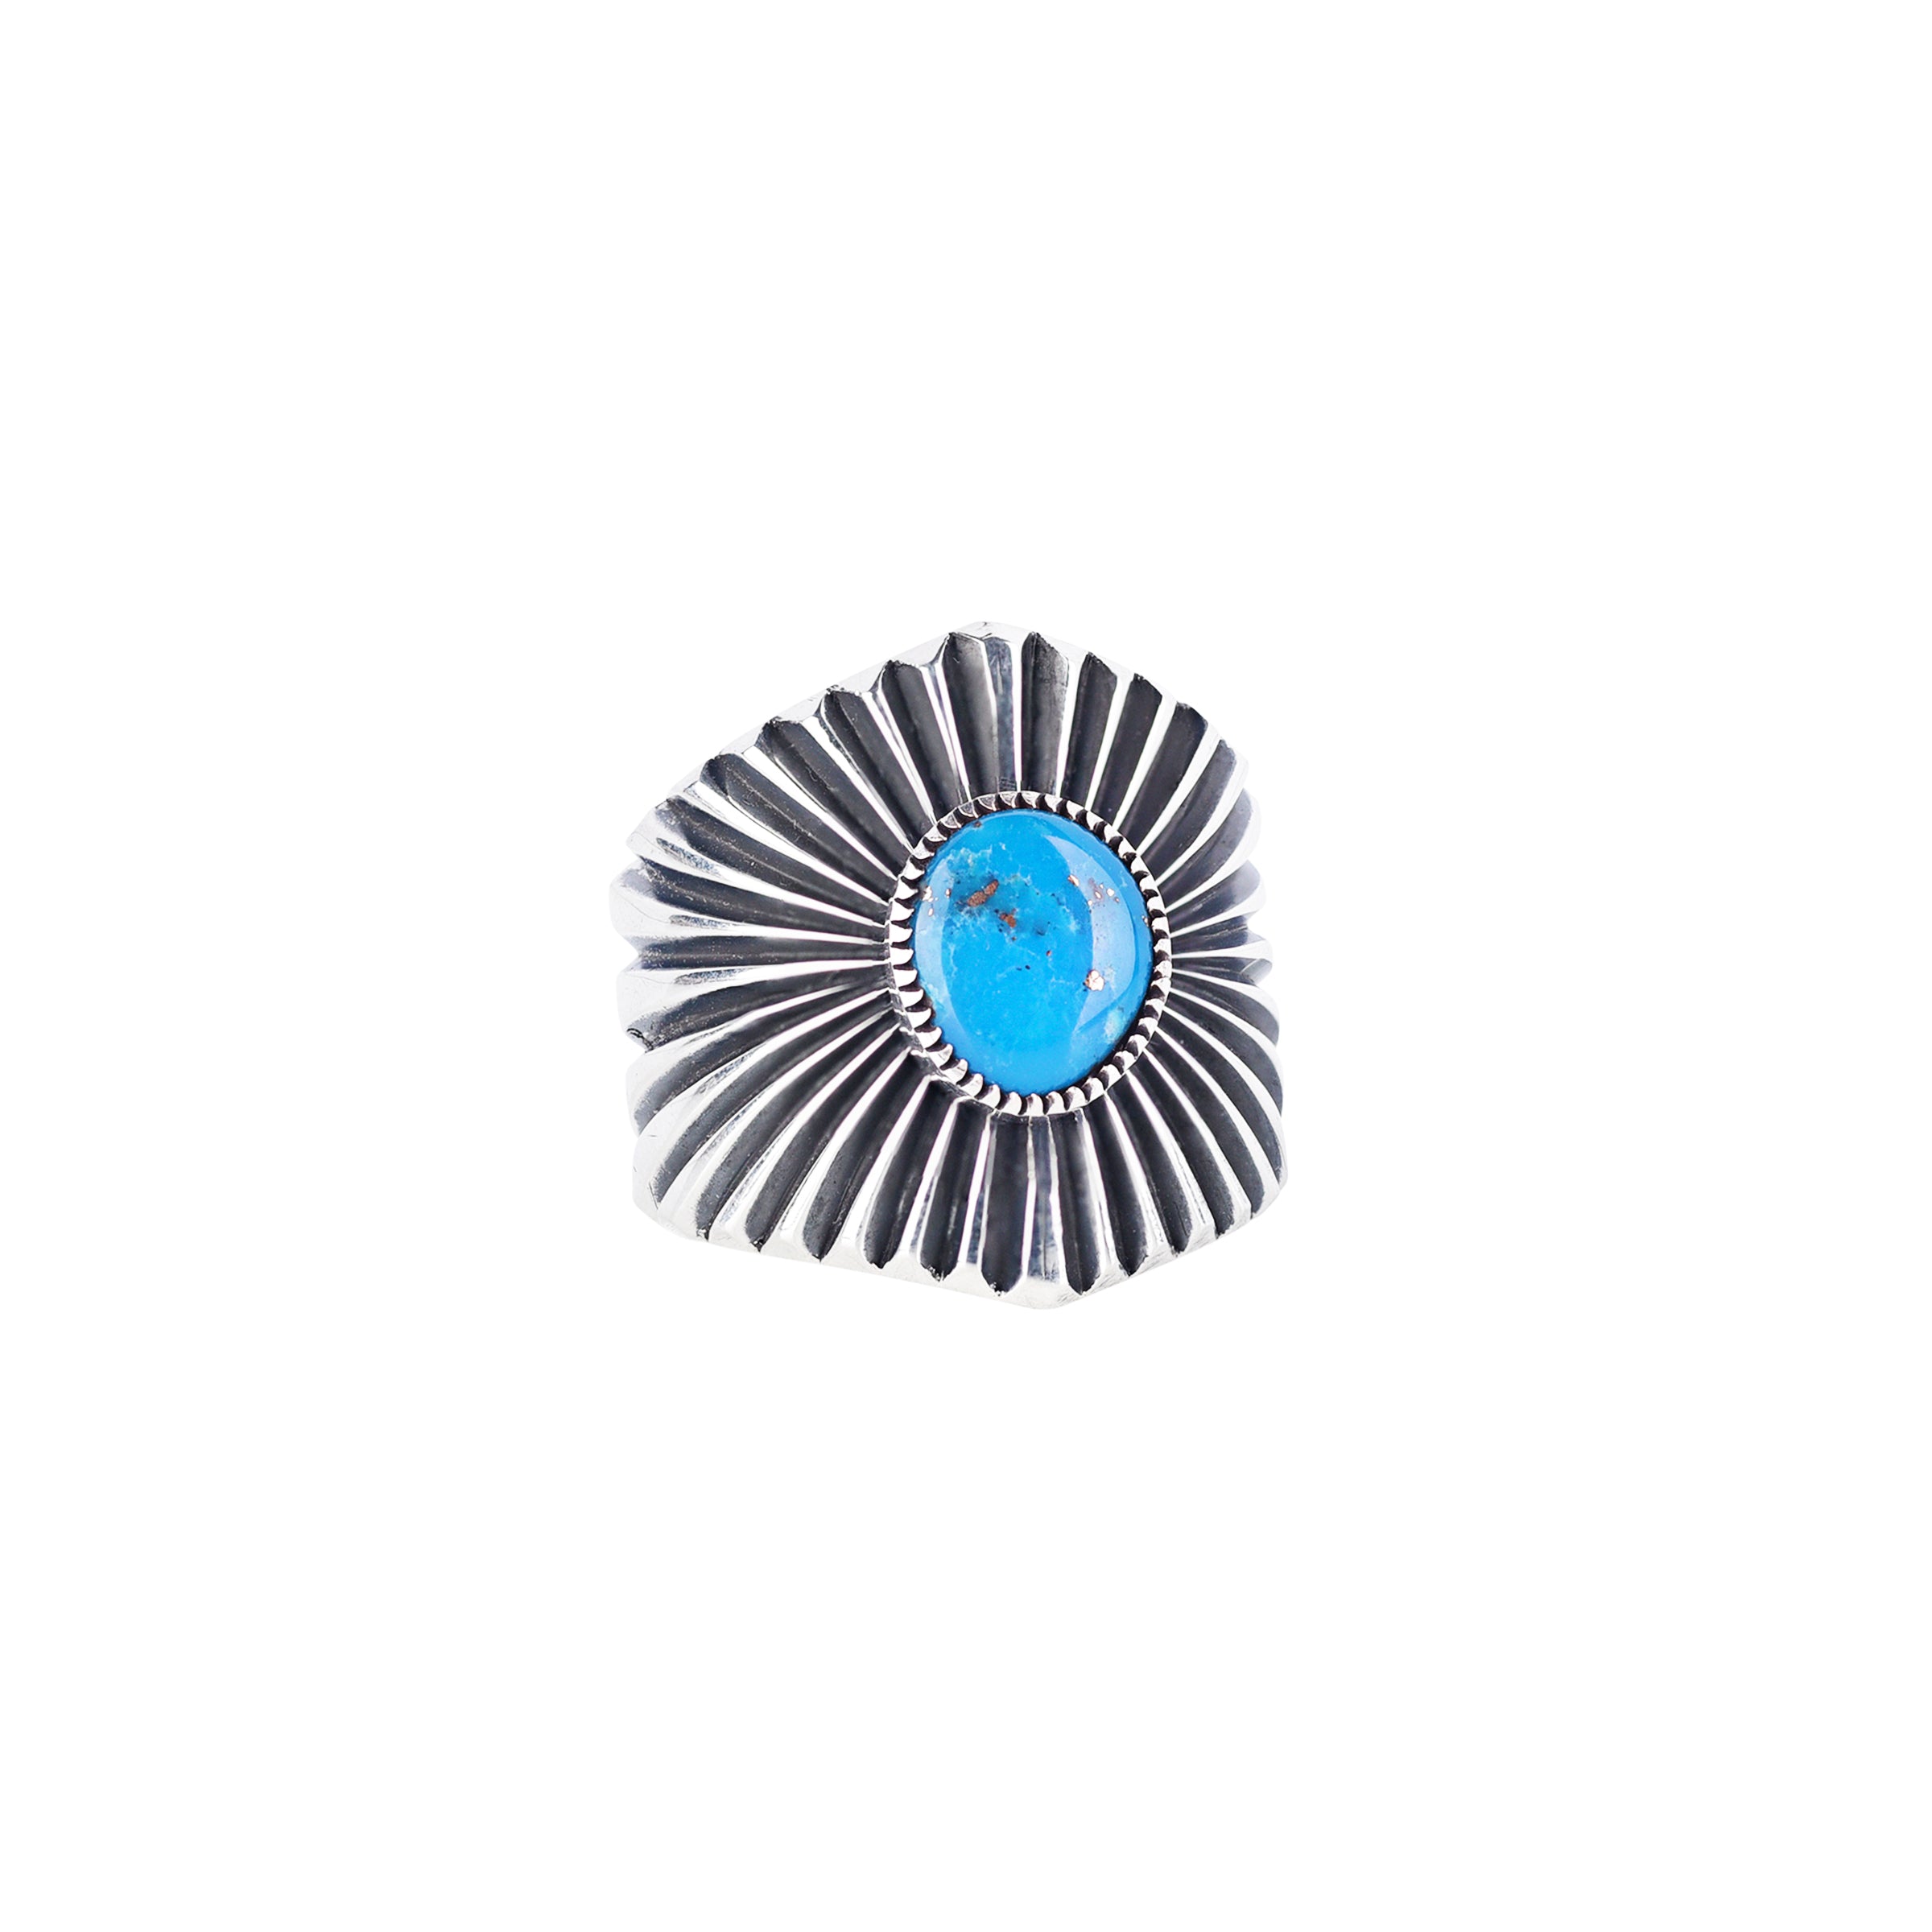 Harrison Jim Turquoise Sun Ring - Size 12 1/2